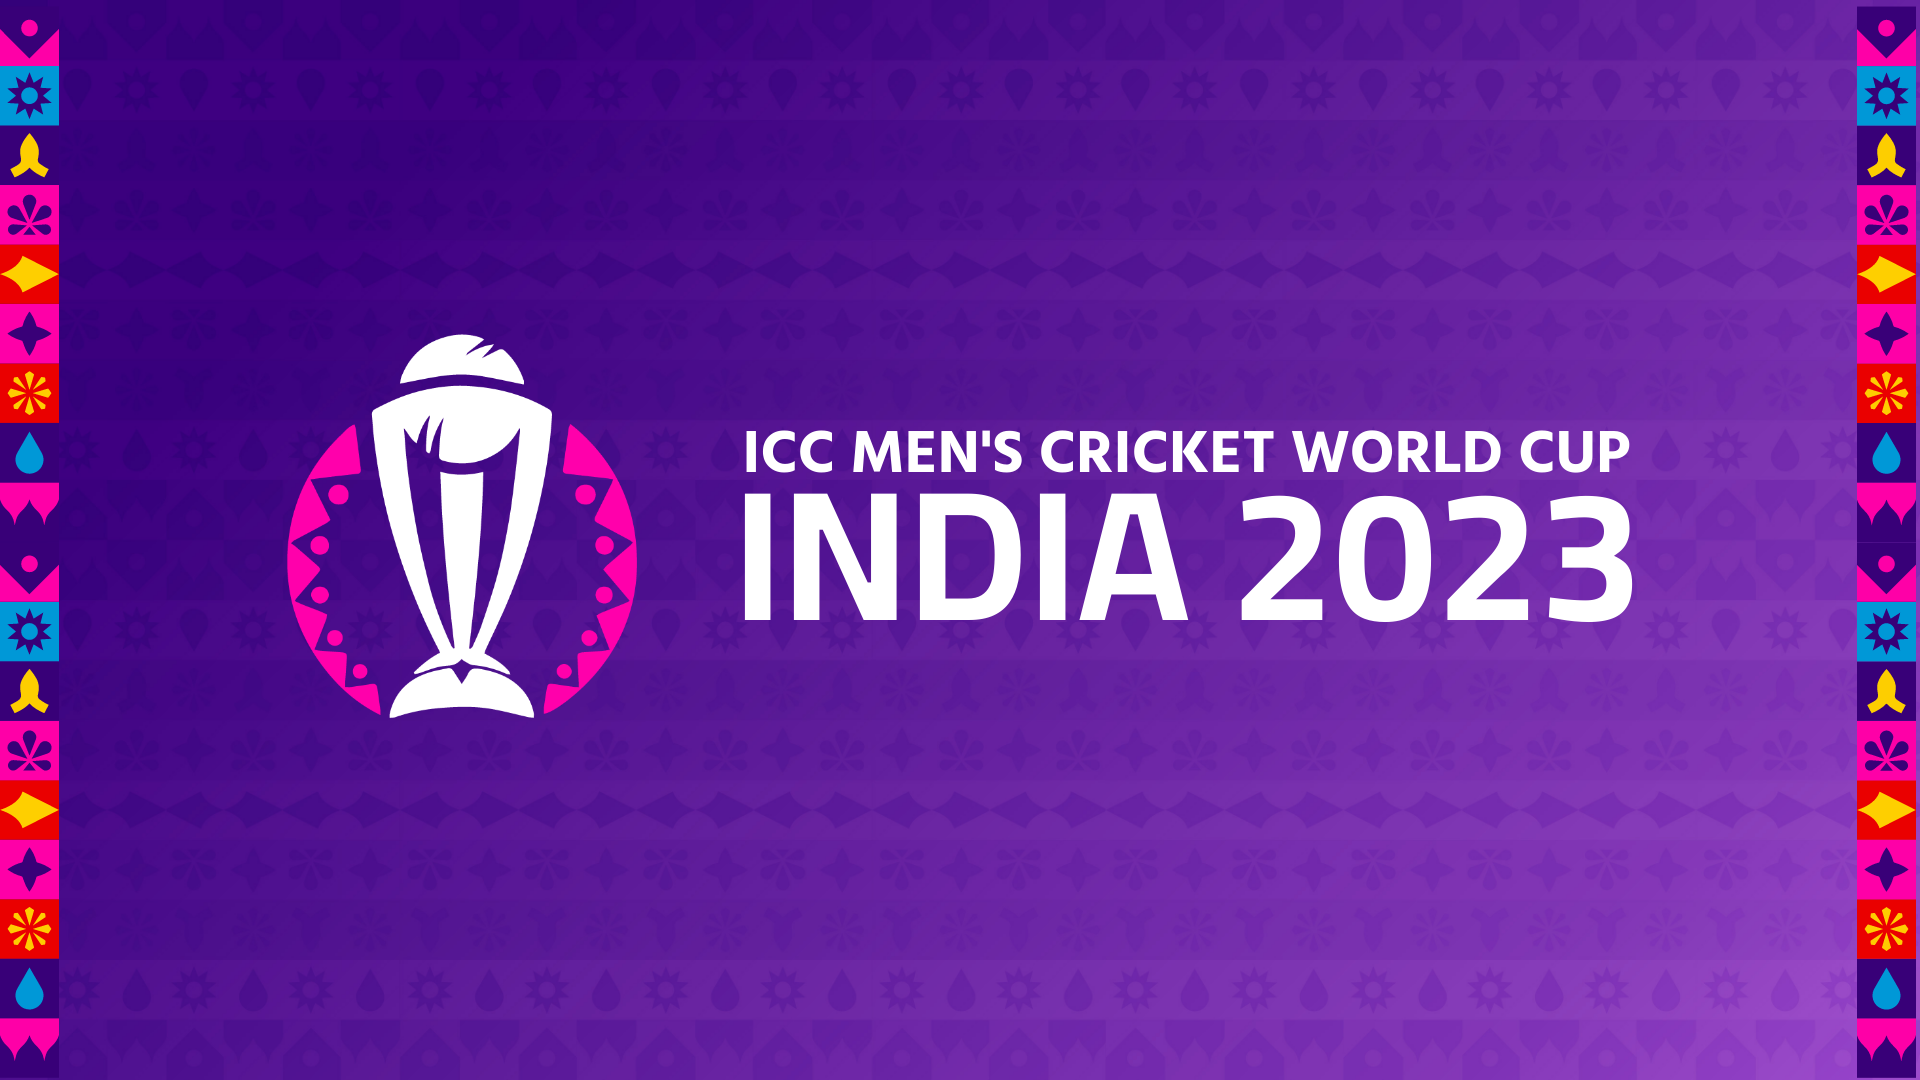 ICC Cricket world cup India 2023 logo animation One Day International  tournament logo animation - YouTube